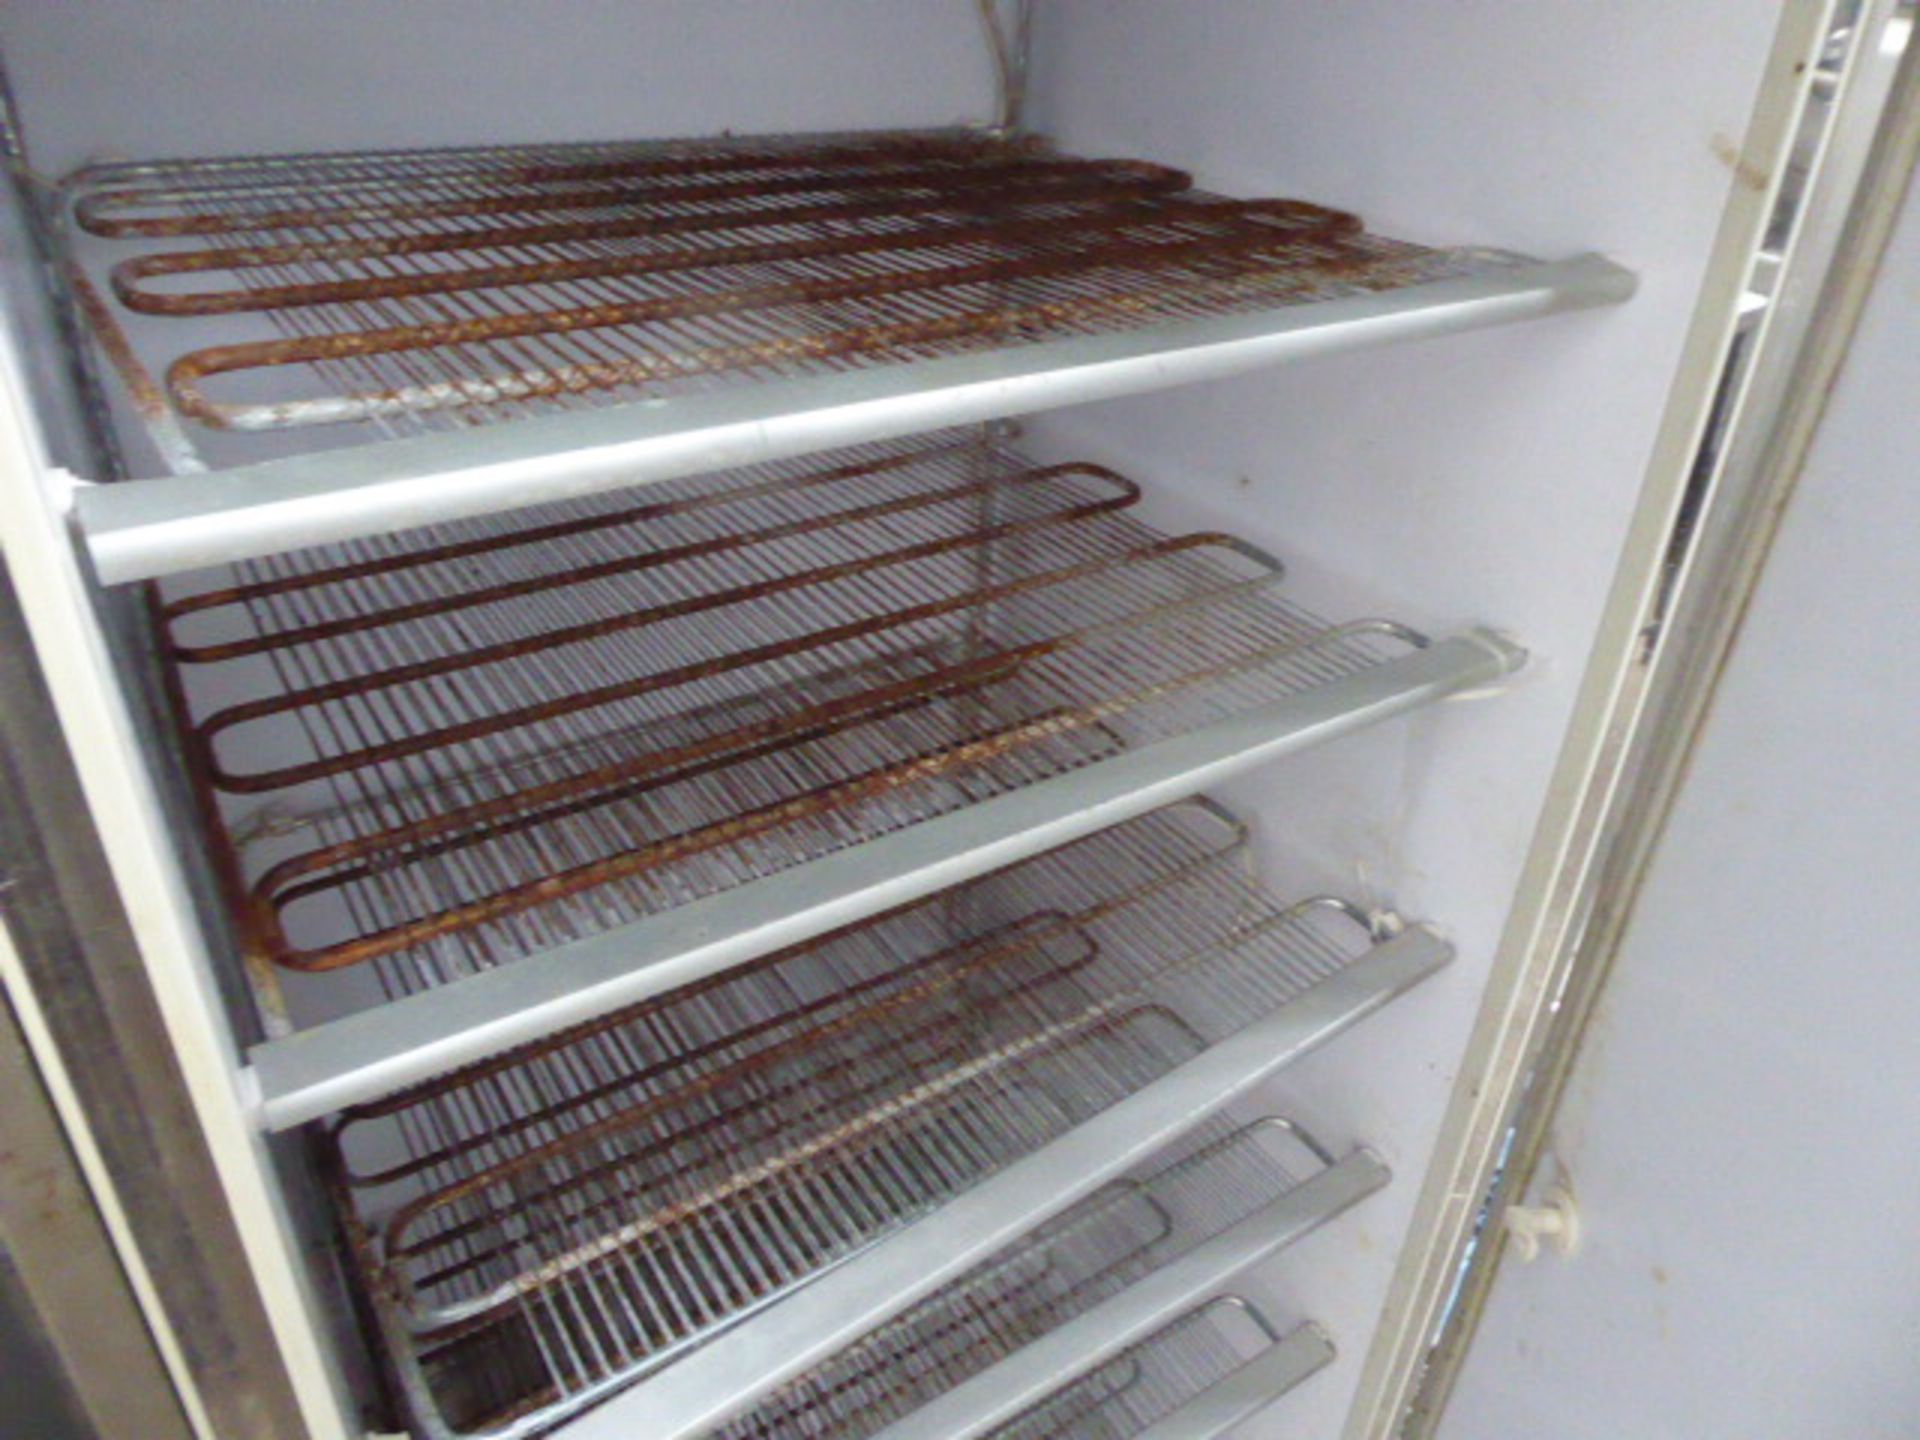 77cm Iarp model ABX500N single door freezer (failed test) - Image 3 of 3